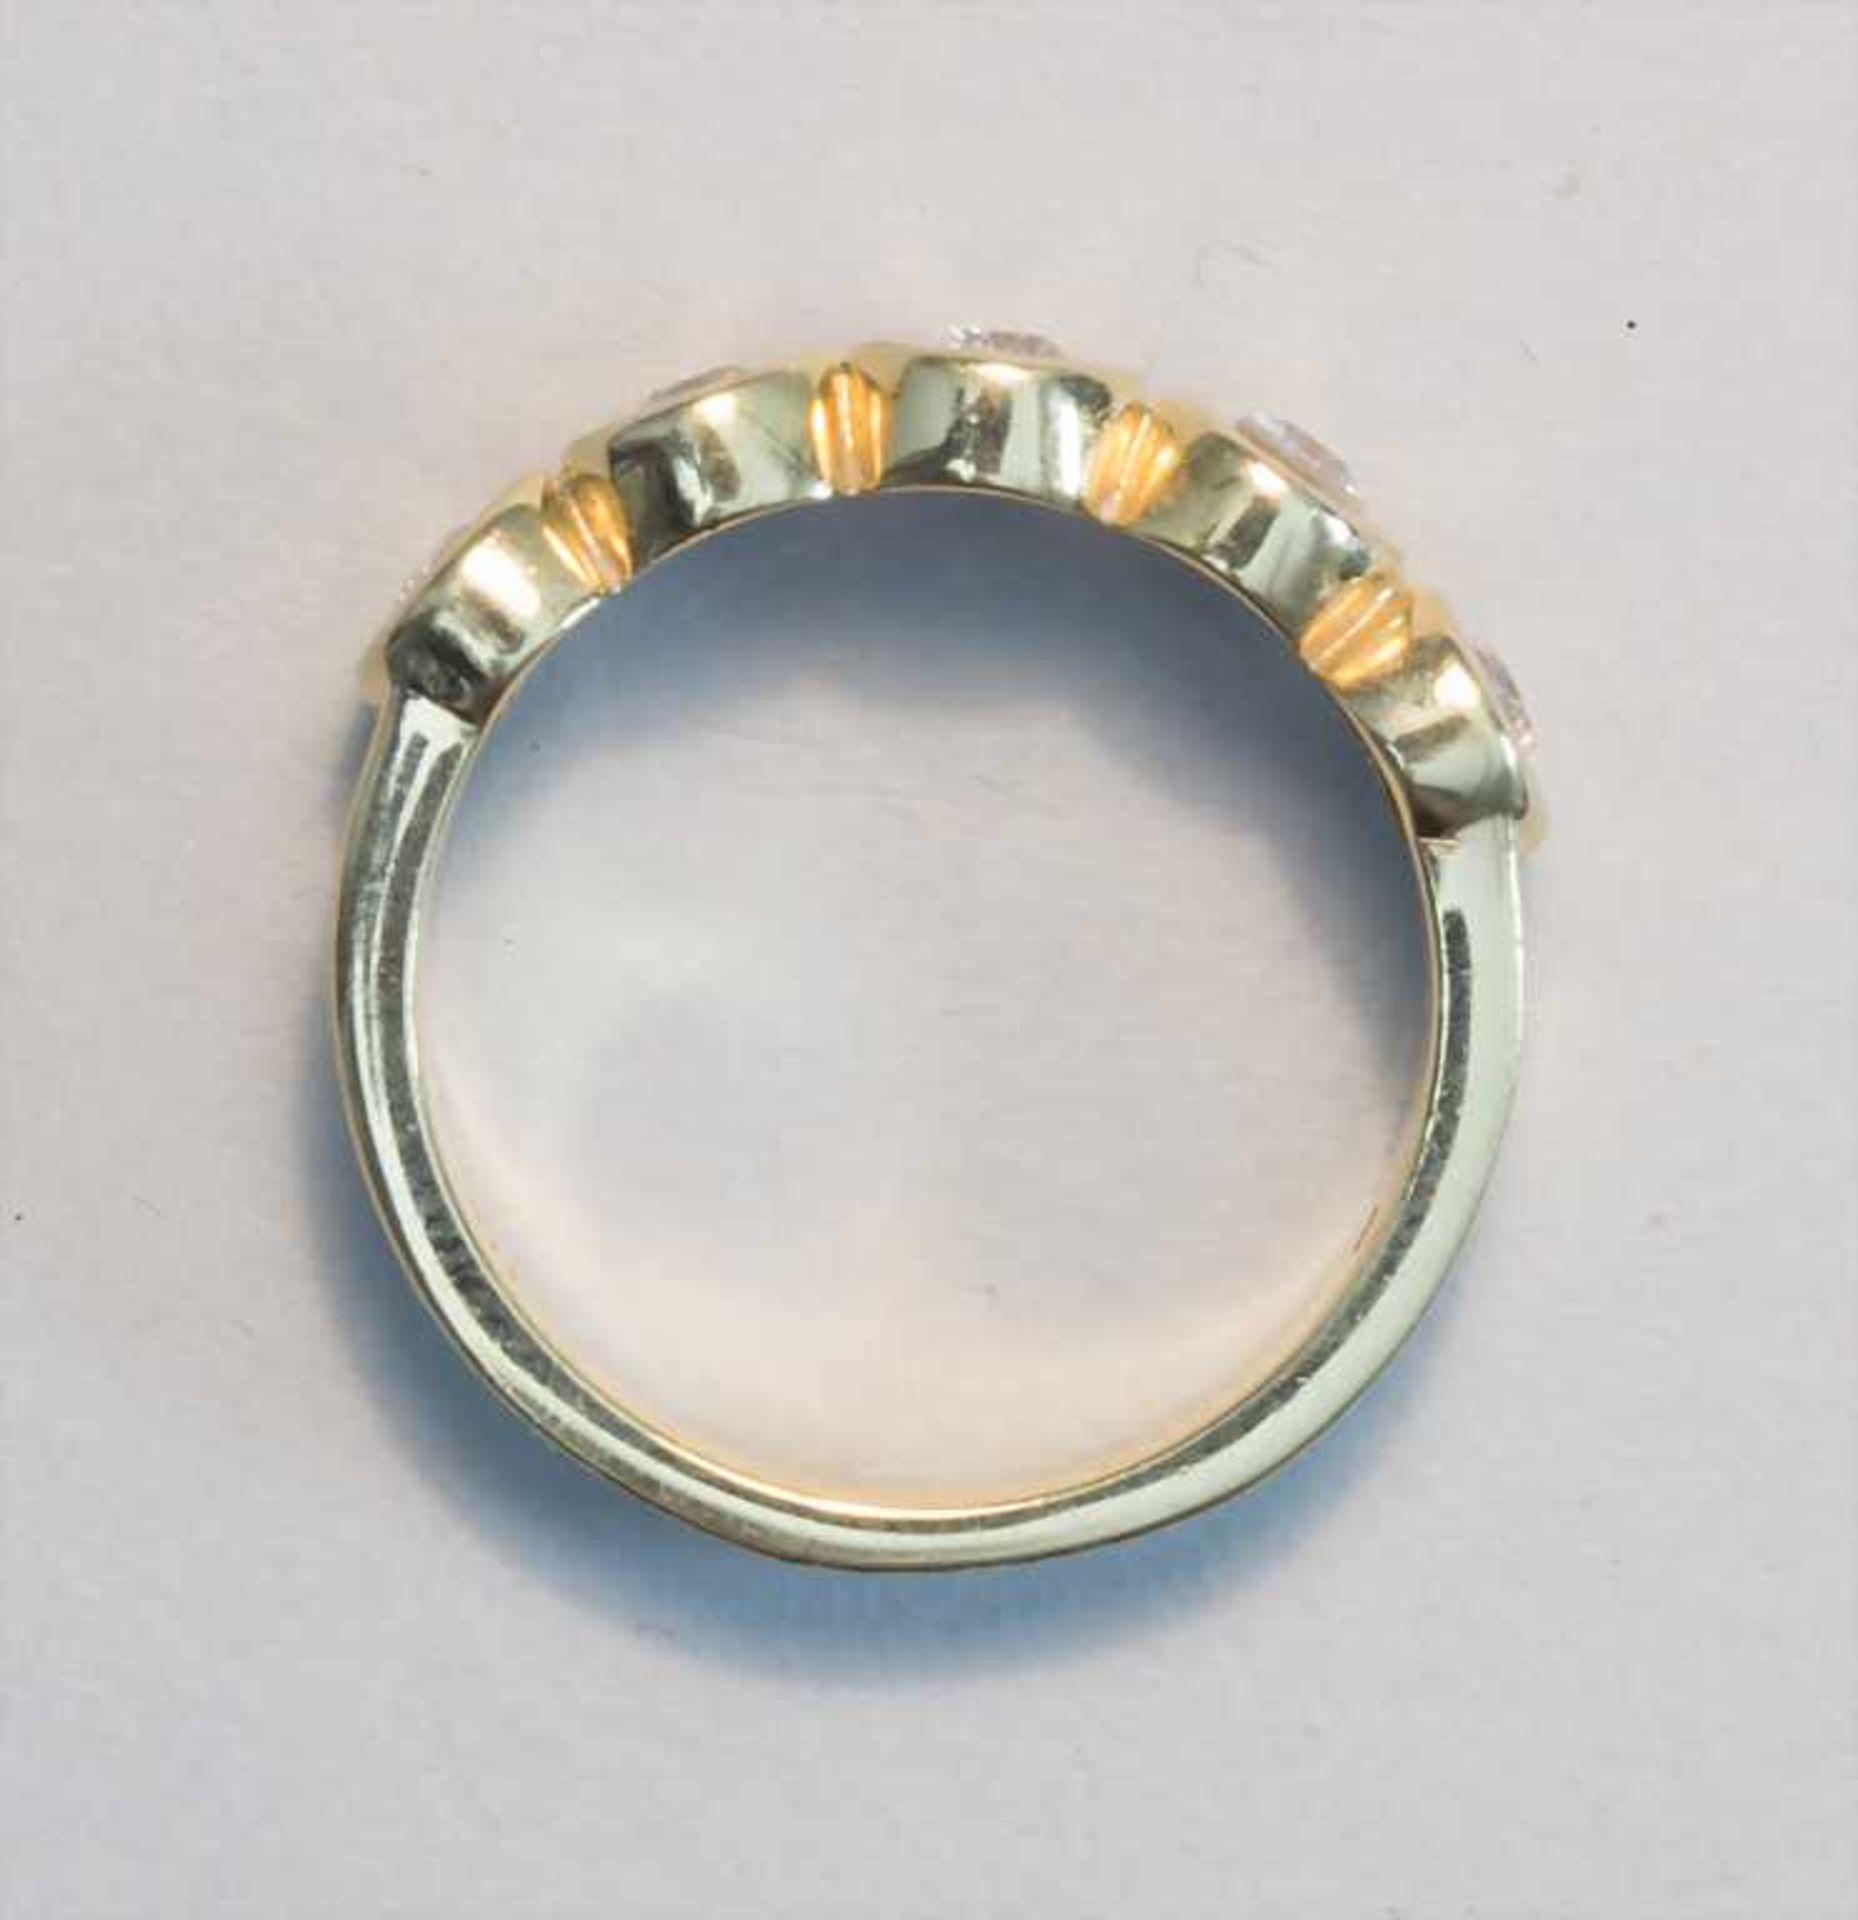 Damenring in Gold / A ladies gold ring - Bild 4 aus 4